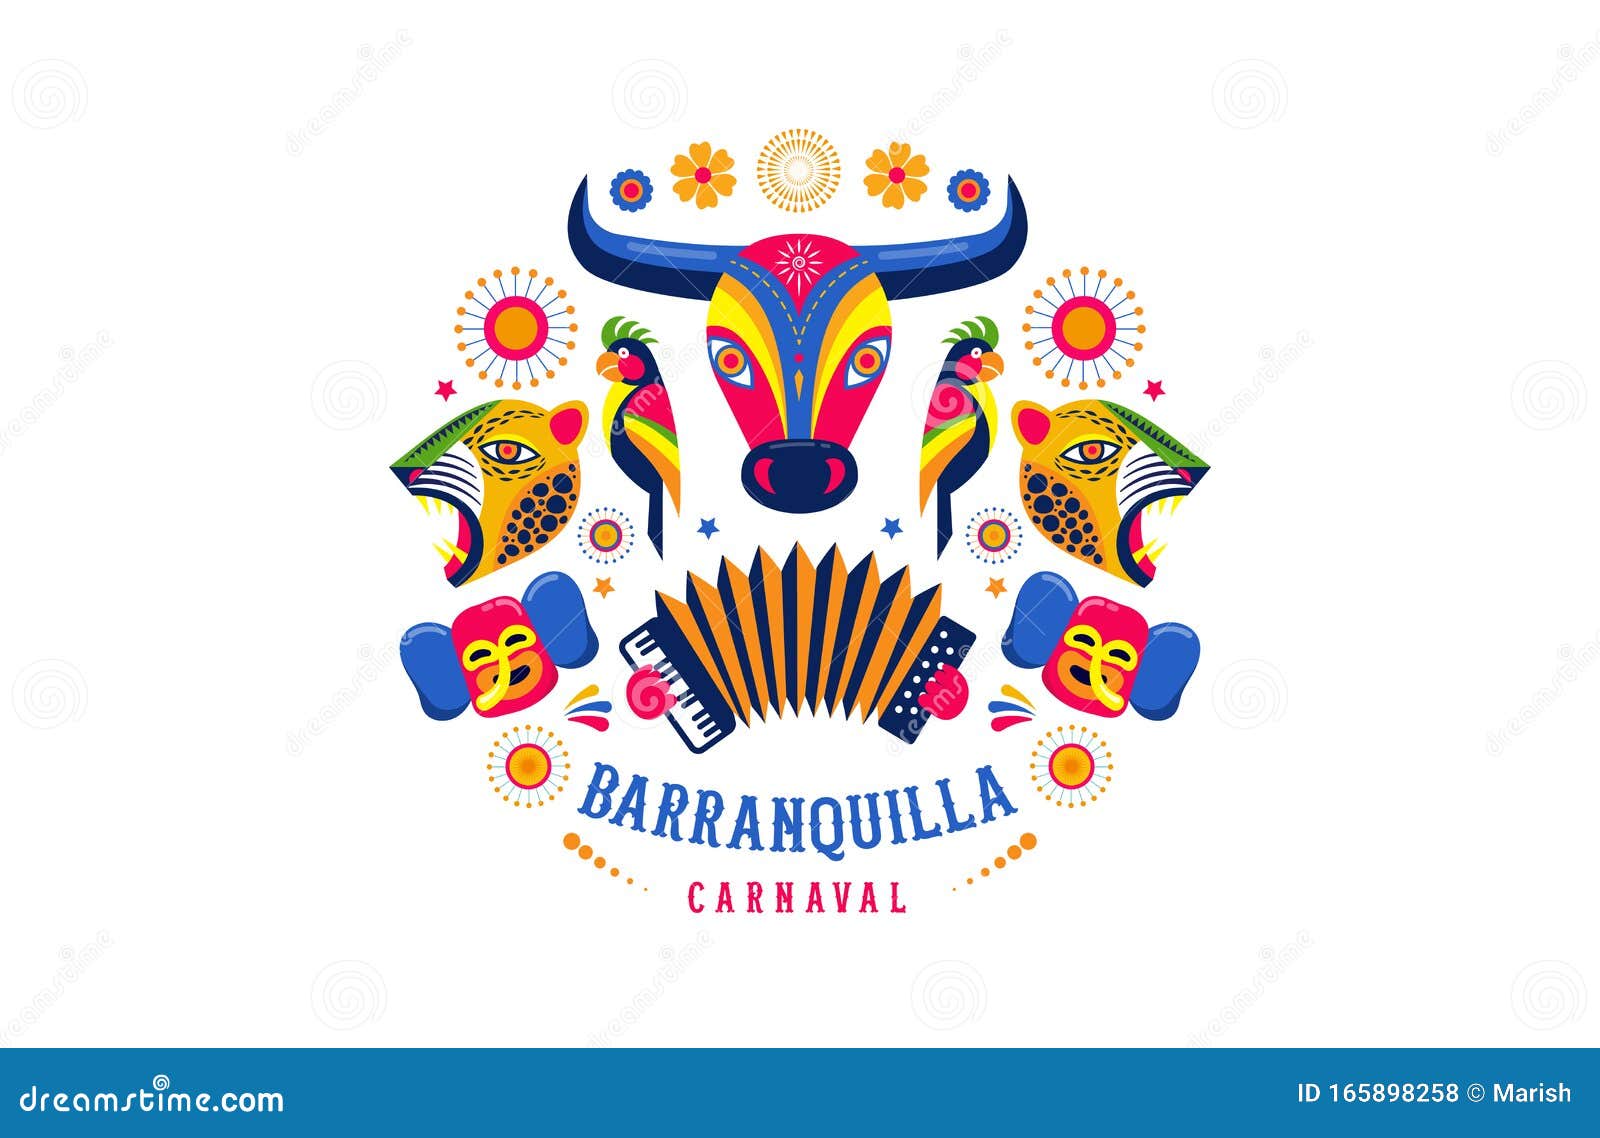 carnaval de barranquilla illustrated  template 